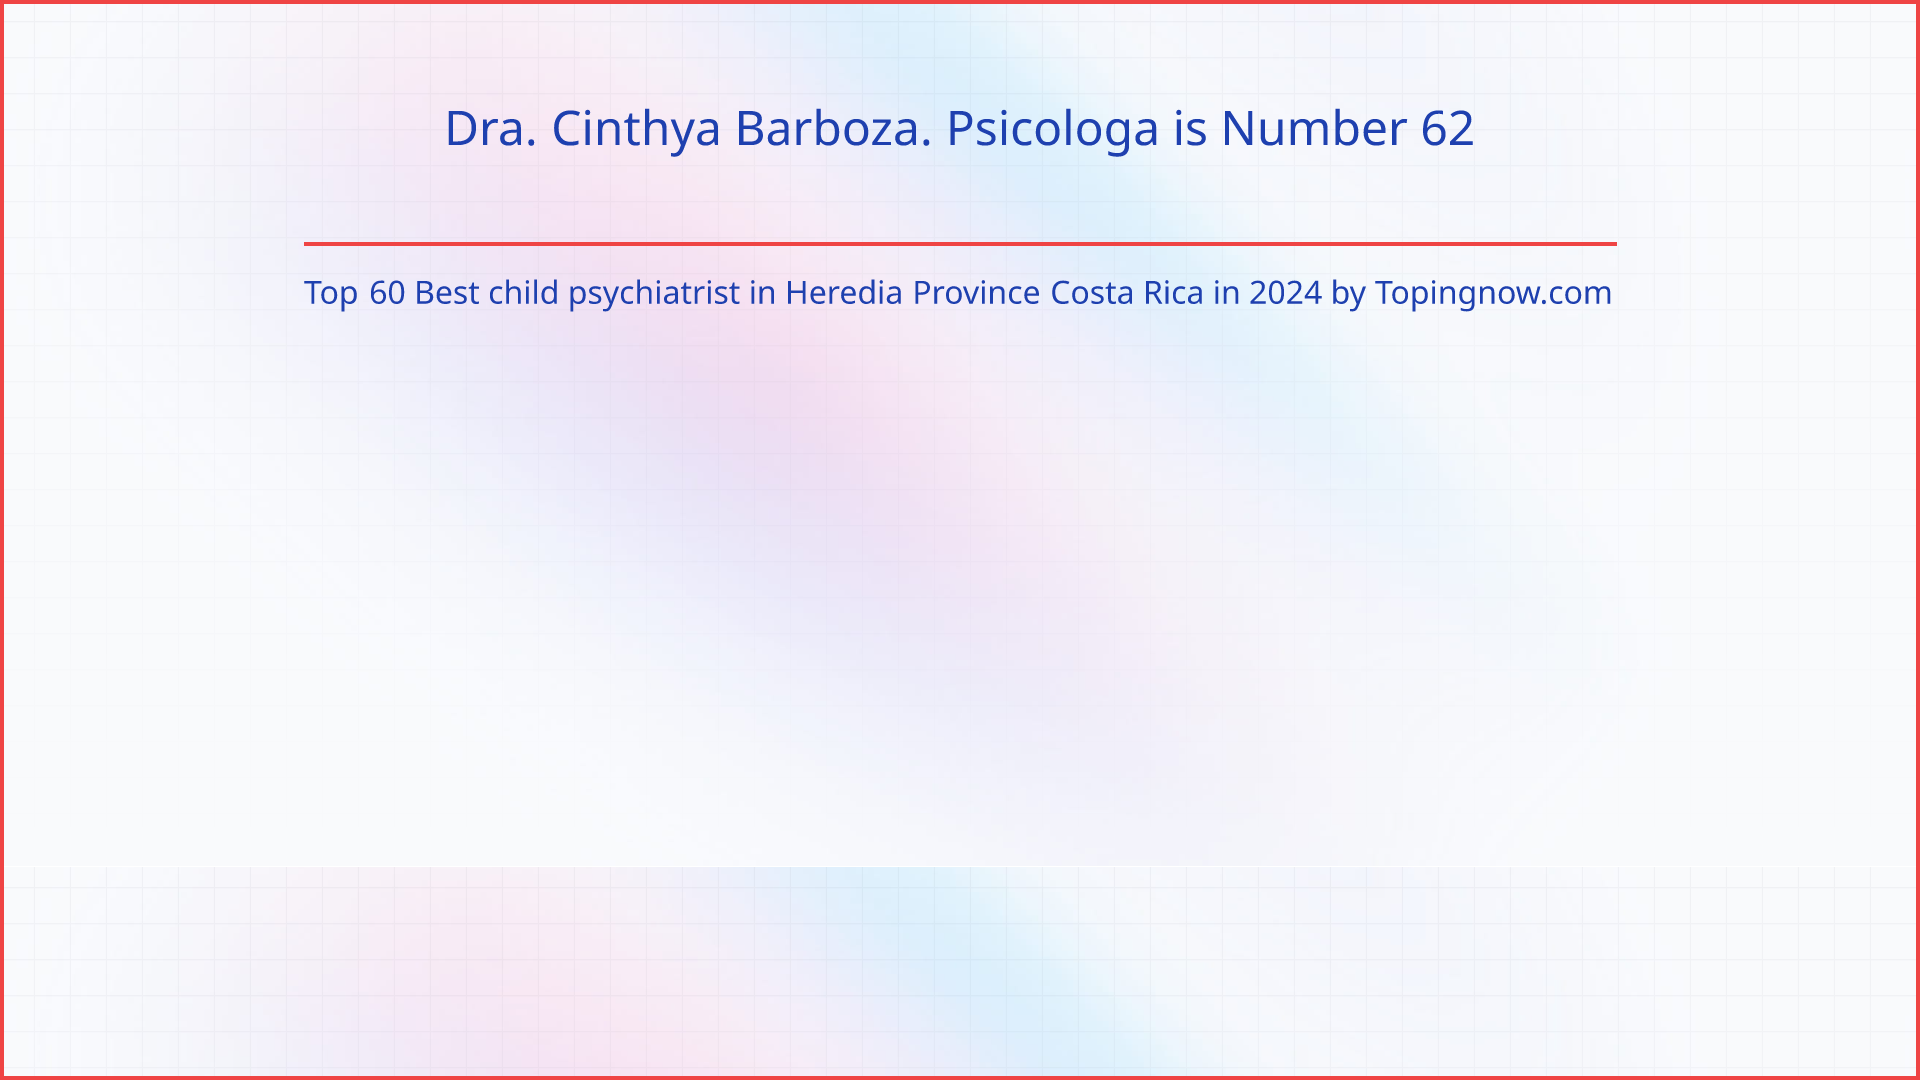 Dra. Cinthya Barboza. Psicologa: Top 60 Best child psychiatrist in Heredia Province Costa Rica in 2024